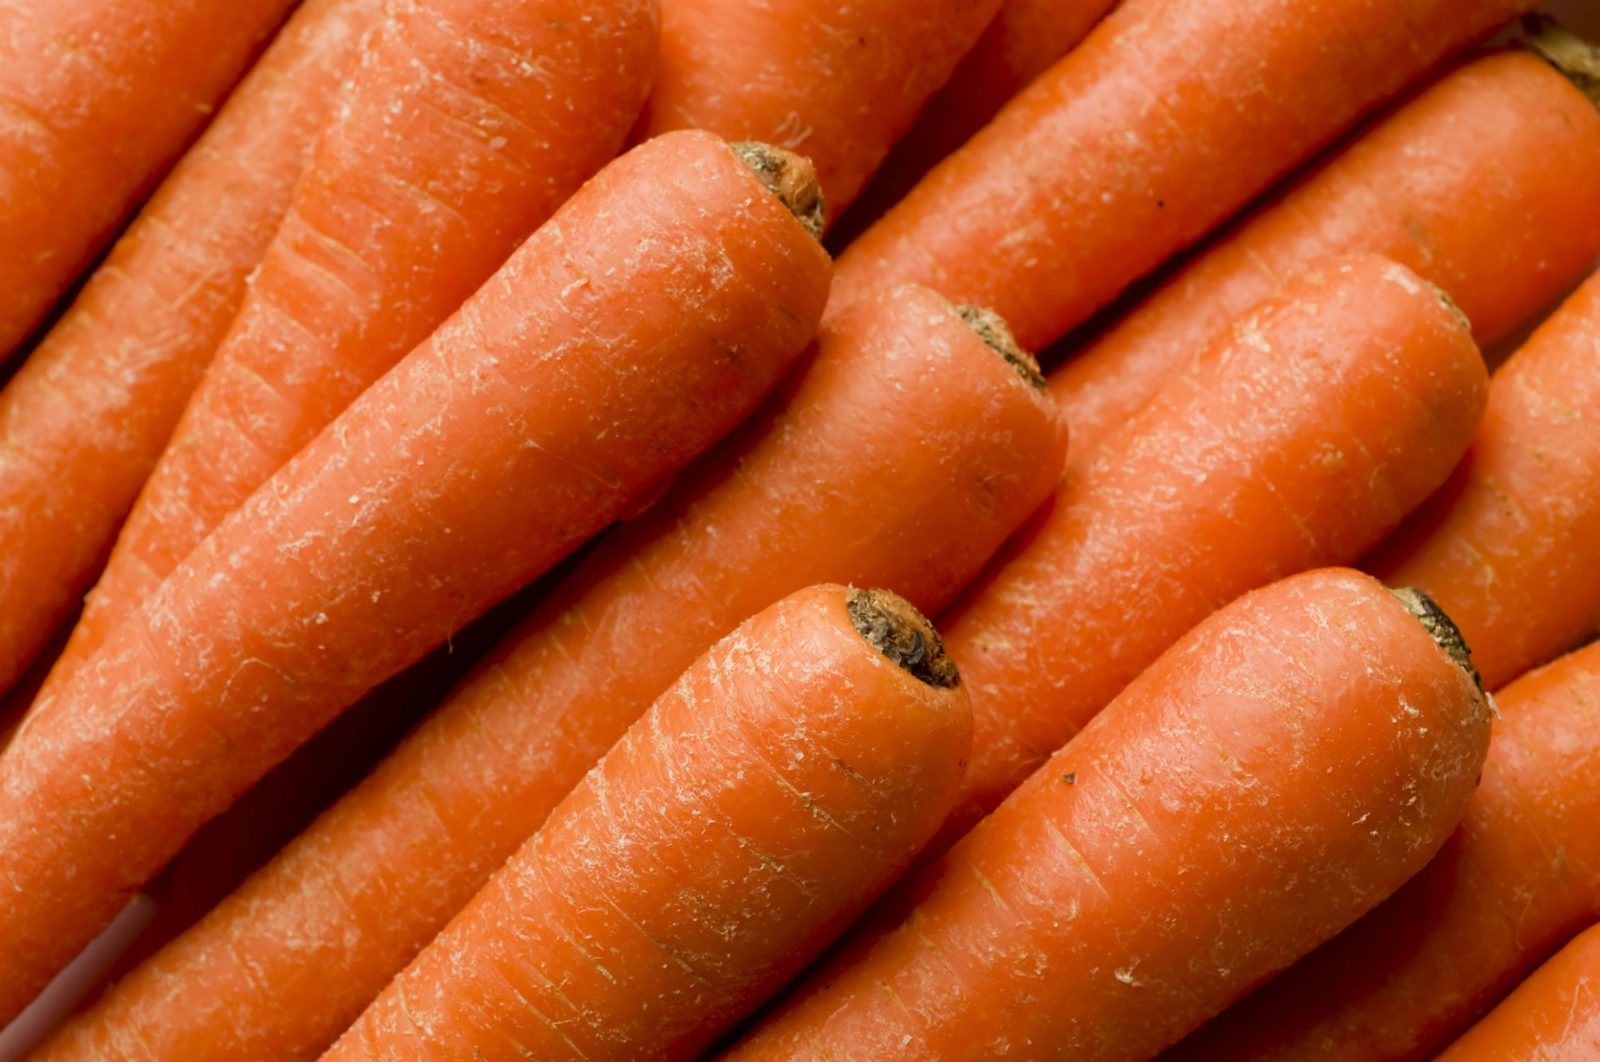 Multiple Carrots